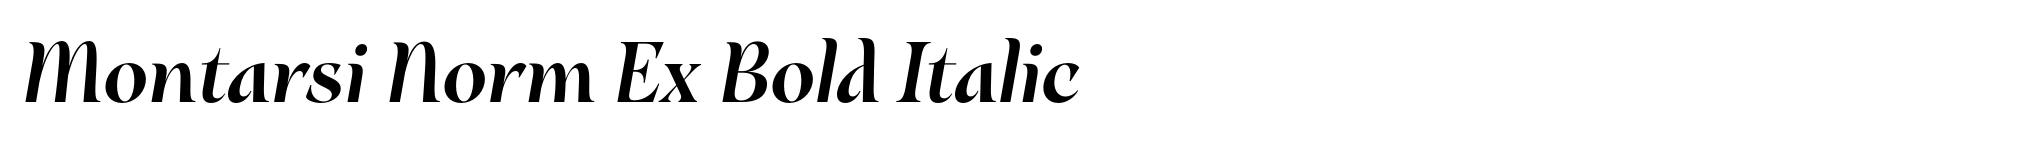 Montarsi Norm Ex Bold Italic image